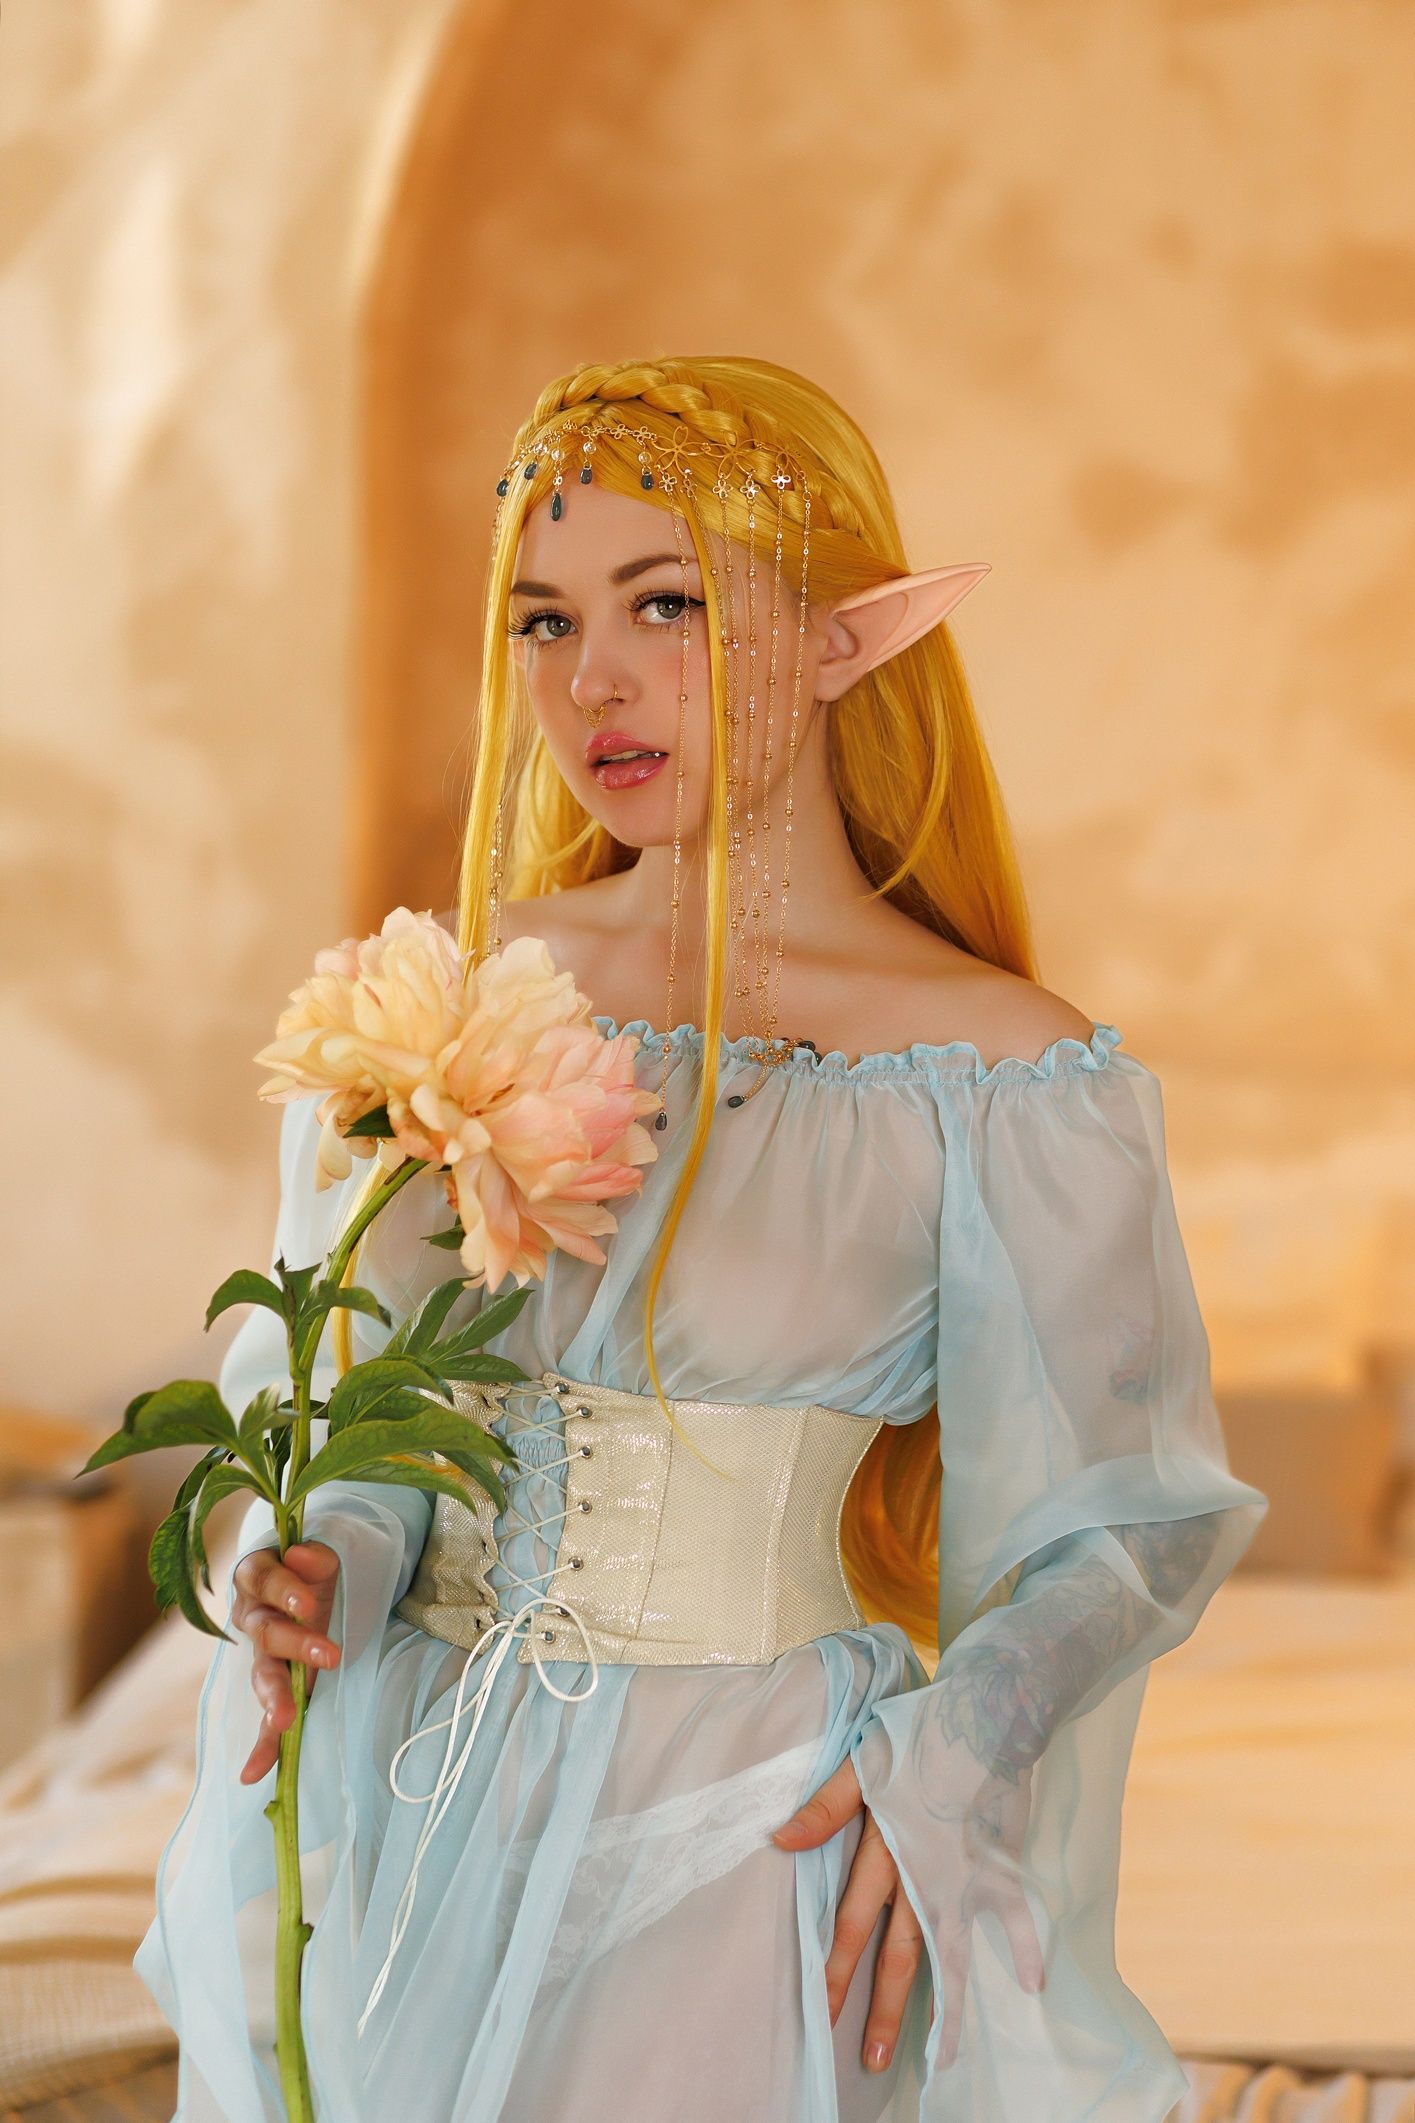 Косплей на принцессу Зельду из  The Legend of Zelda. Косплеер: Алина Сагнак. Фотограф: Ирина Сеидова. Источник фото: vk.com/zukomiw